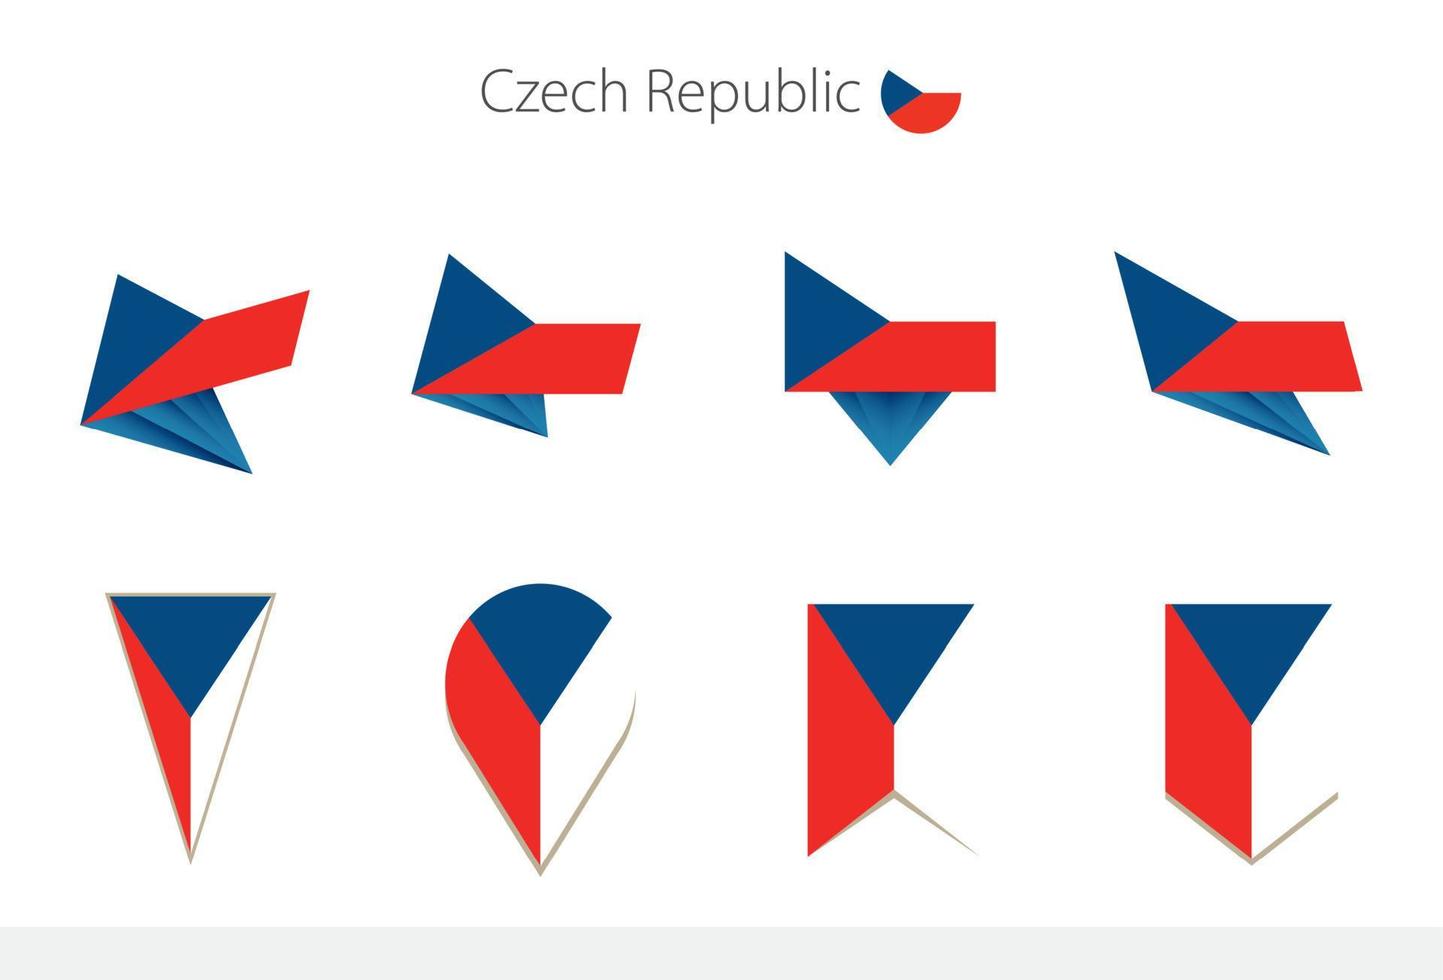 Czech Republic national flag collection, eight versions of Czech Republic vector flags.